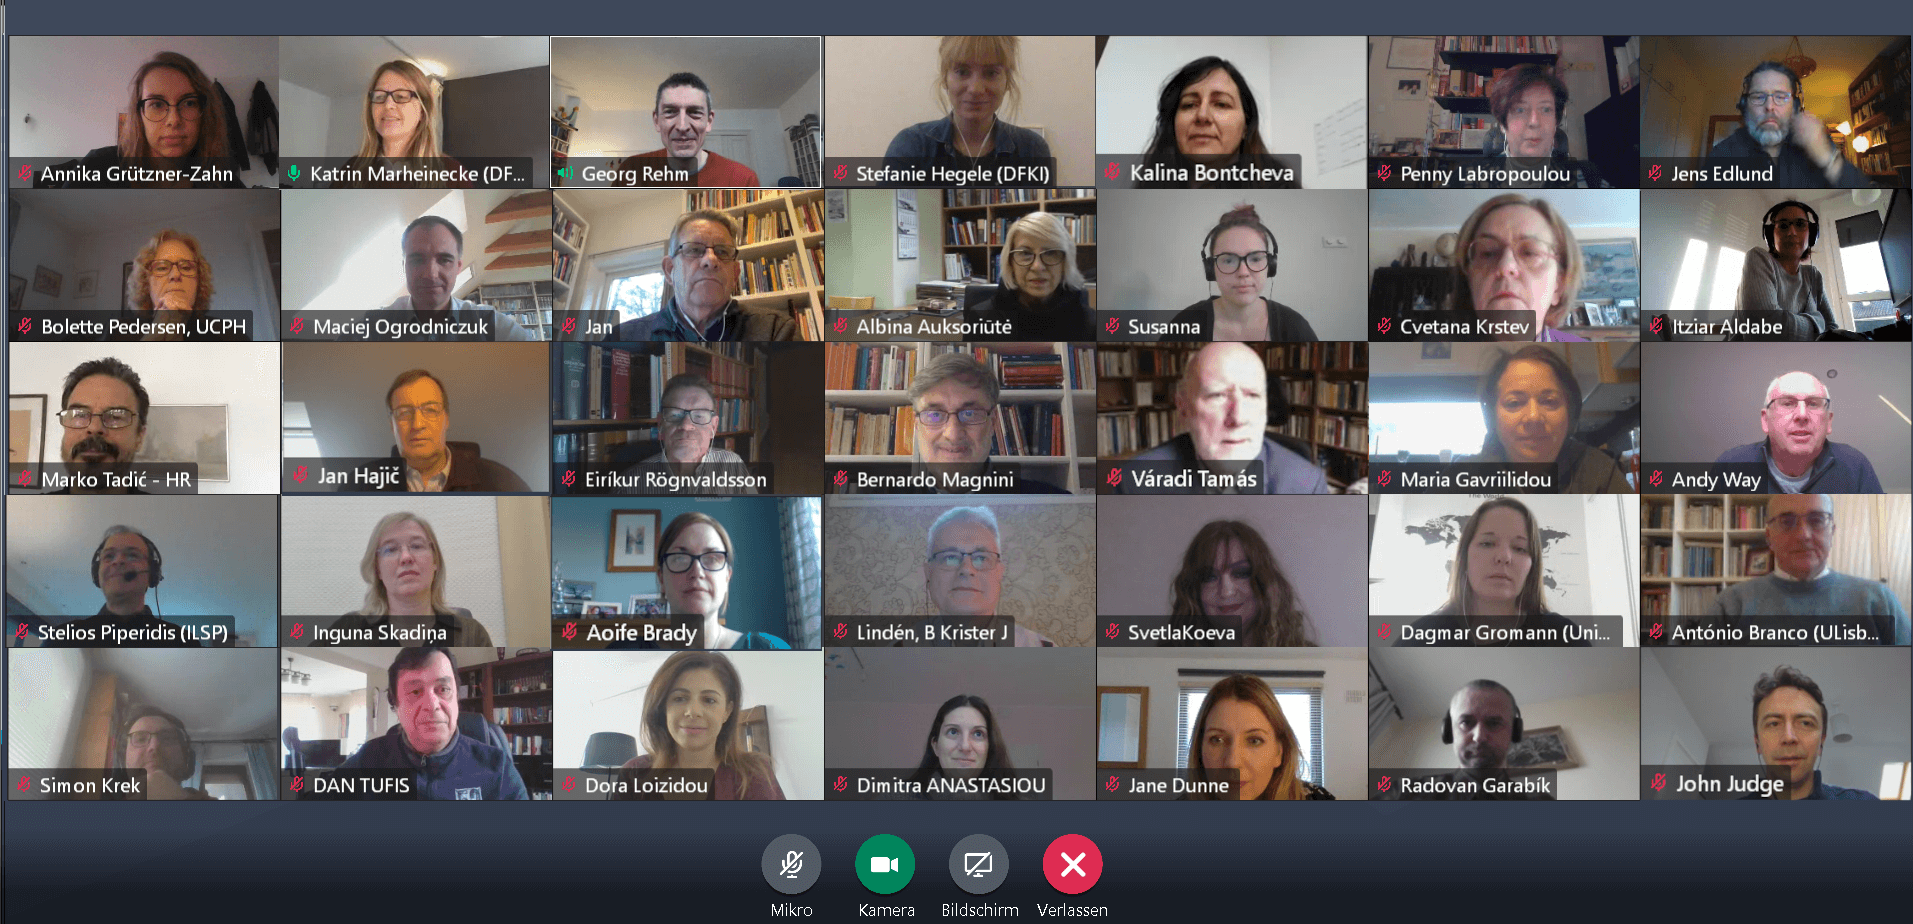 NCC meeting screenshot of the participants